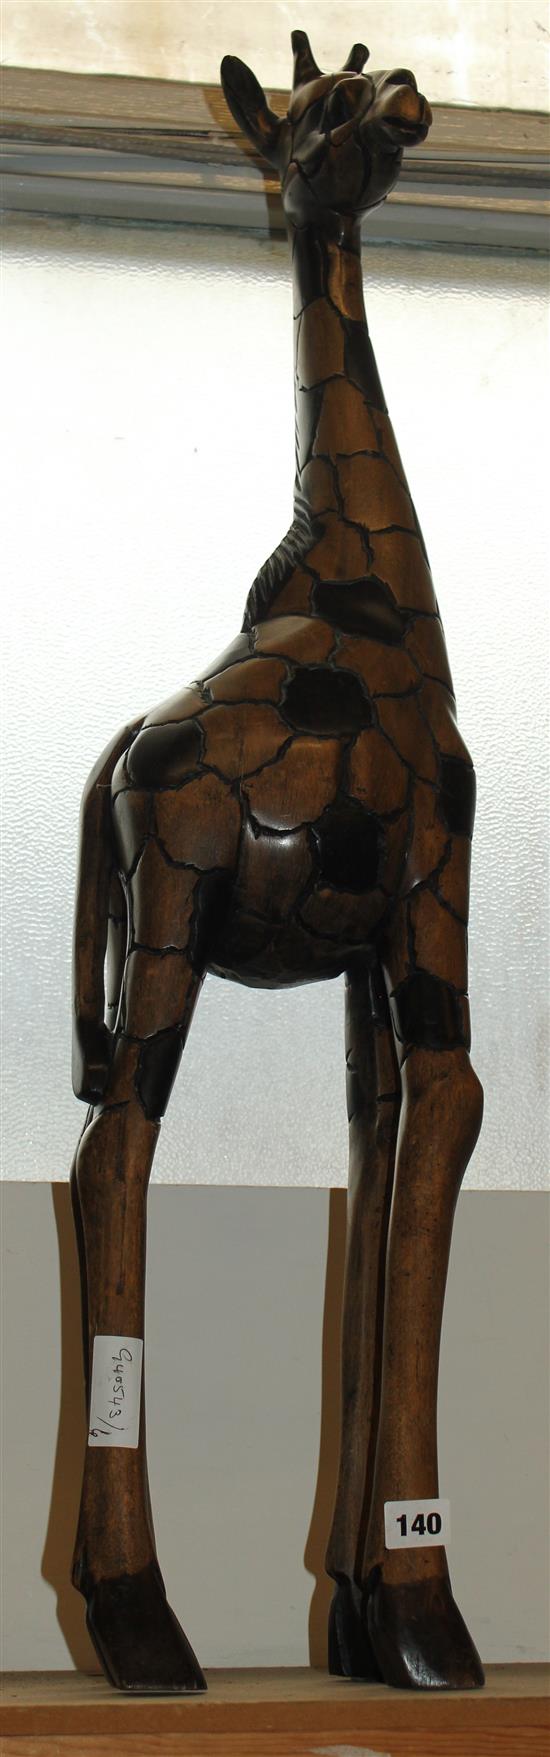 Carved giraffe